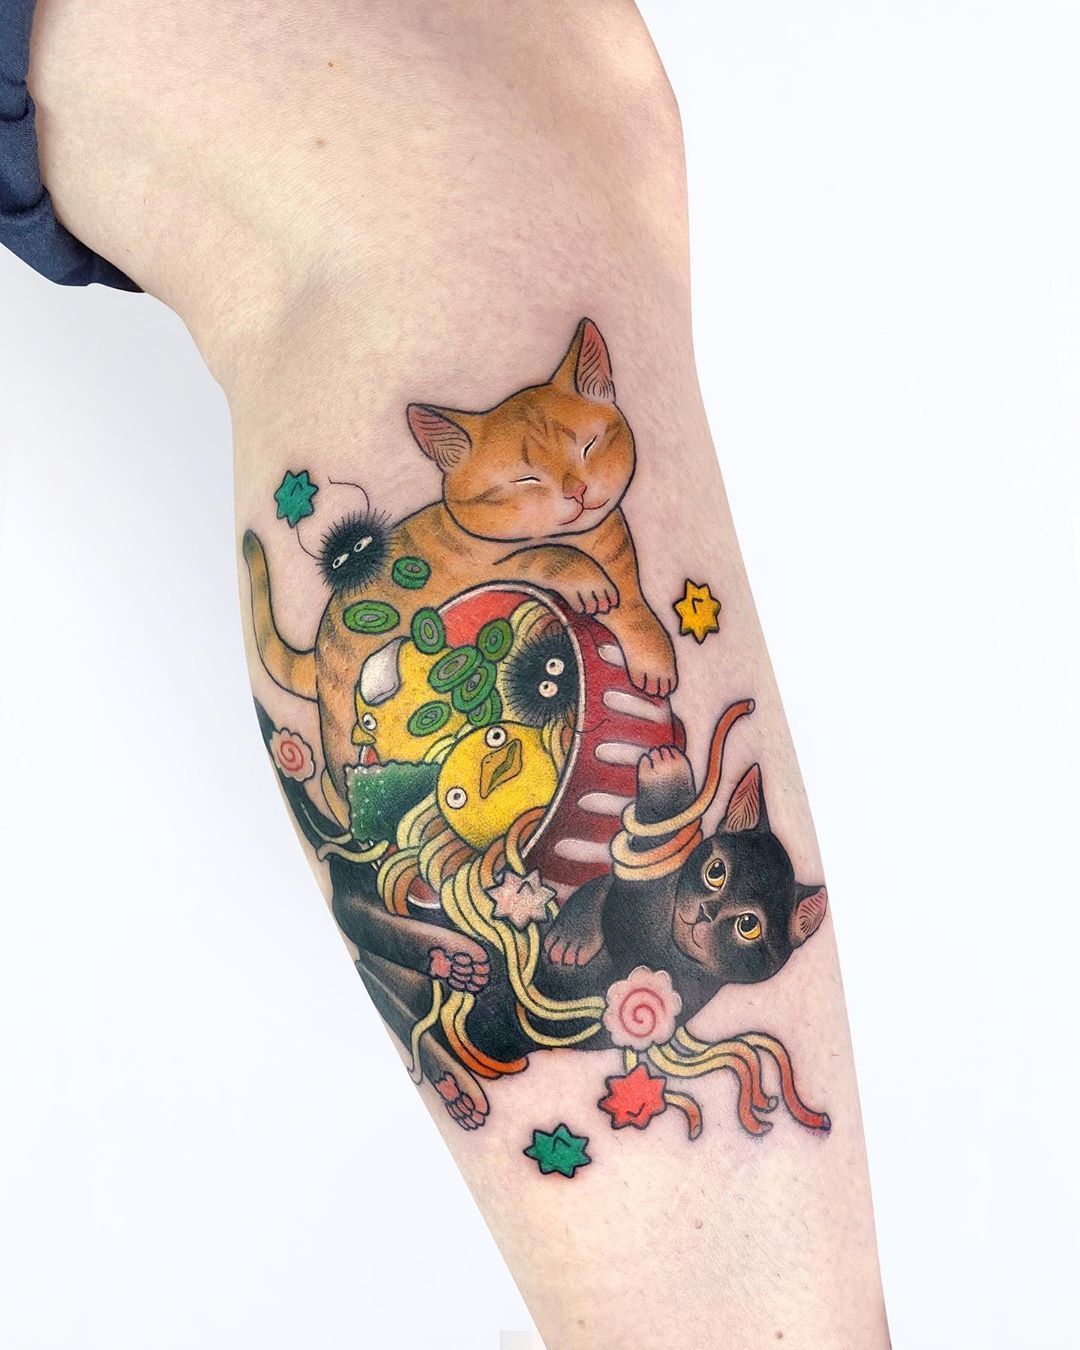 Monmon cat done by me inugami tattoo in Newpaltz NY  rirezumi